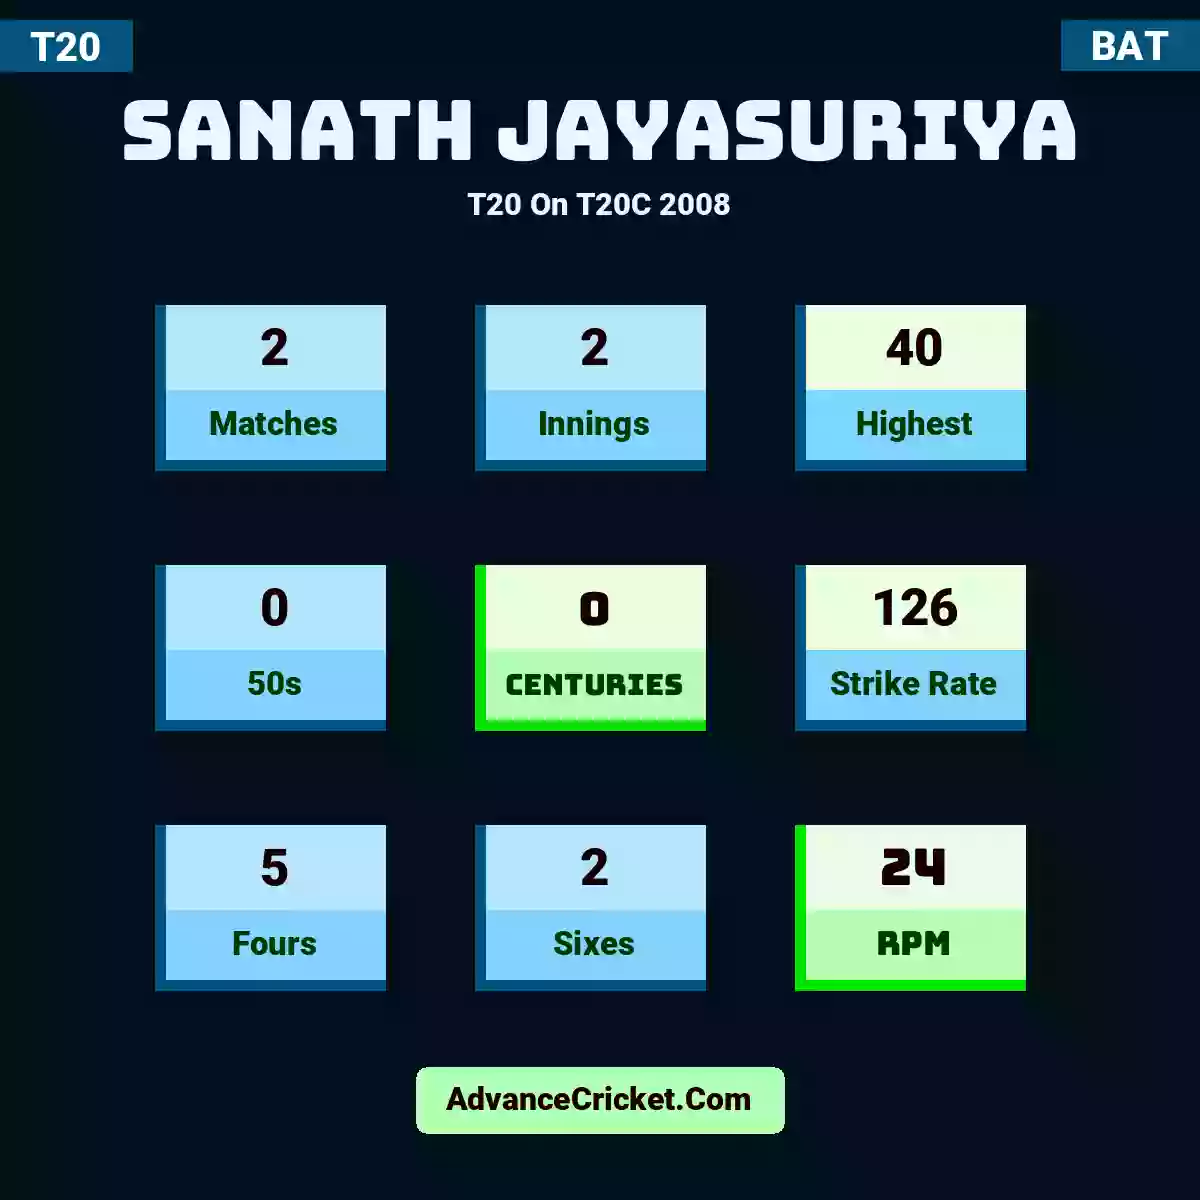 Sanath Jayasuriya T20  On T20C 2008, Sanath Jayasuriya played 2 matches, scored 40 runs as highest, 0 half-centuries, and 0 centuries, with a strike rate of 126. S.Jayasuriya hit 5 fours and 2 sixes, with an RPM of 24.